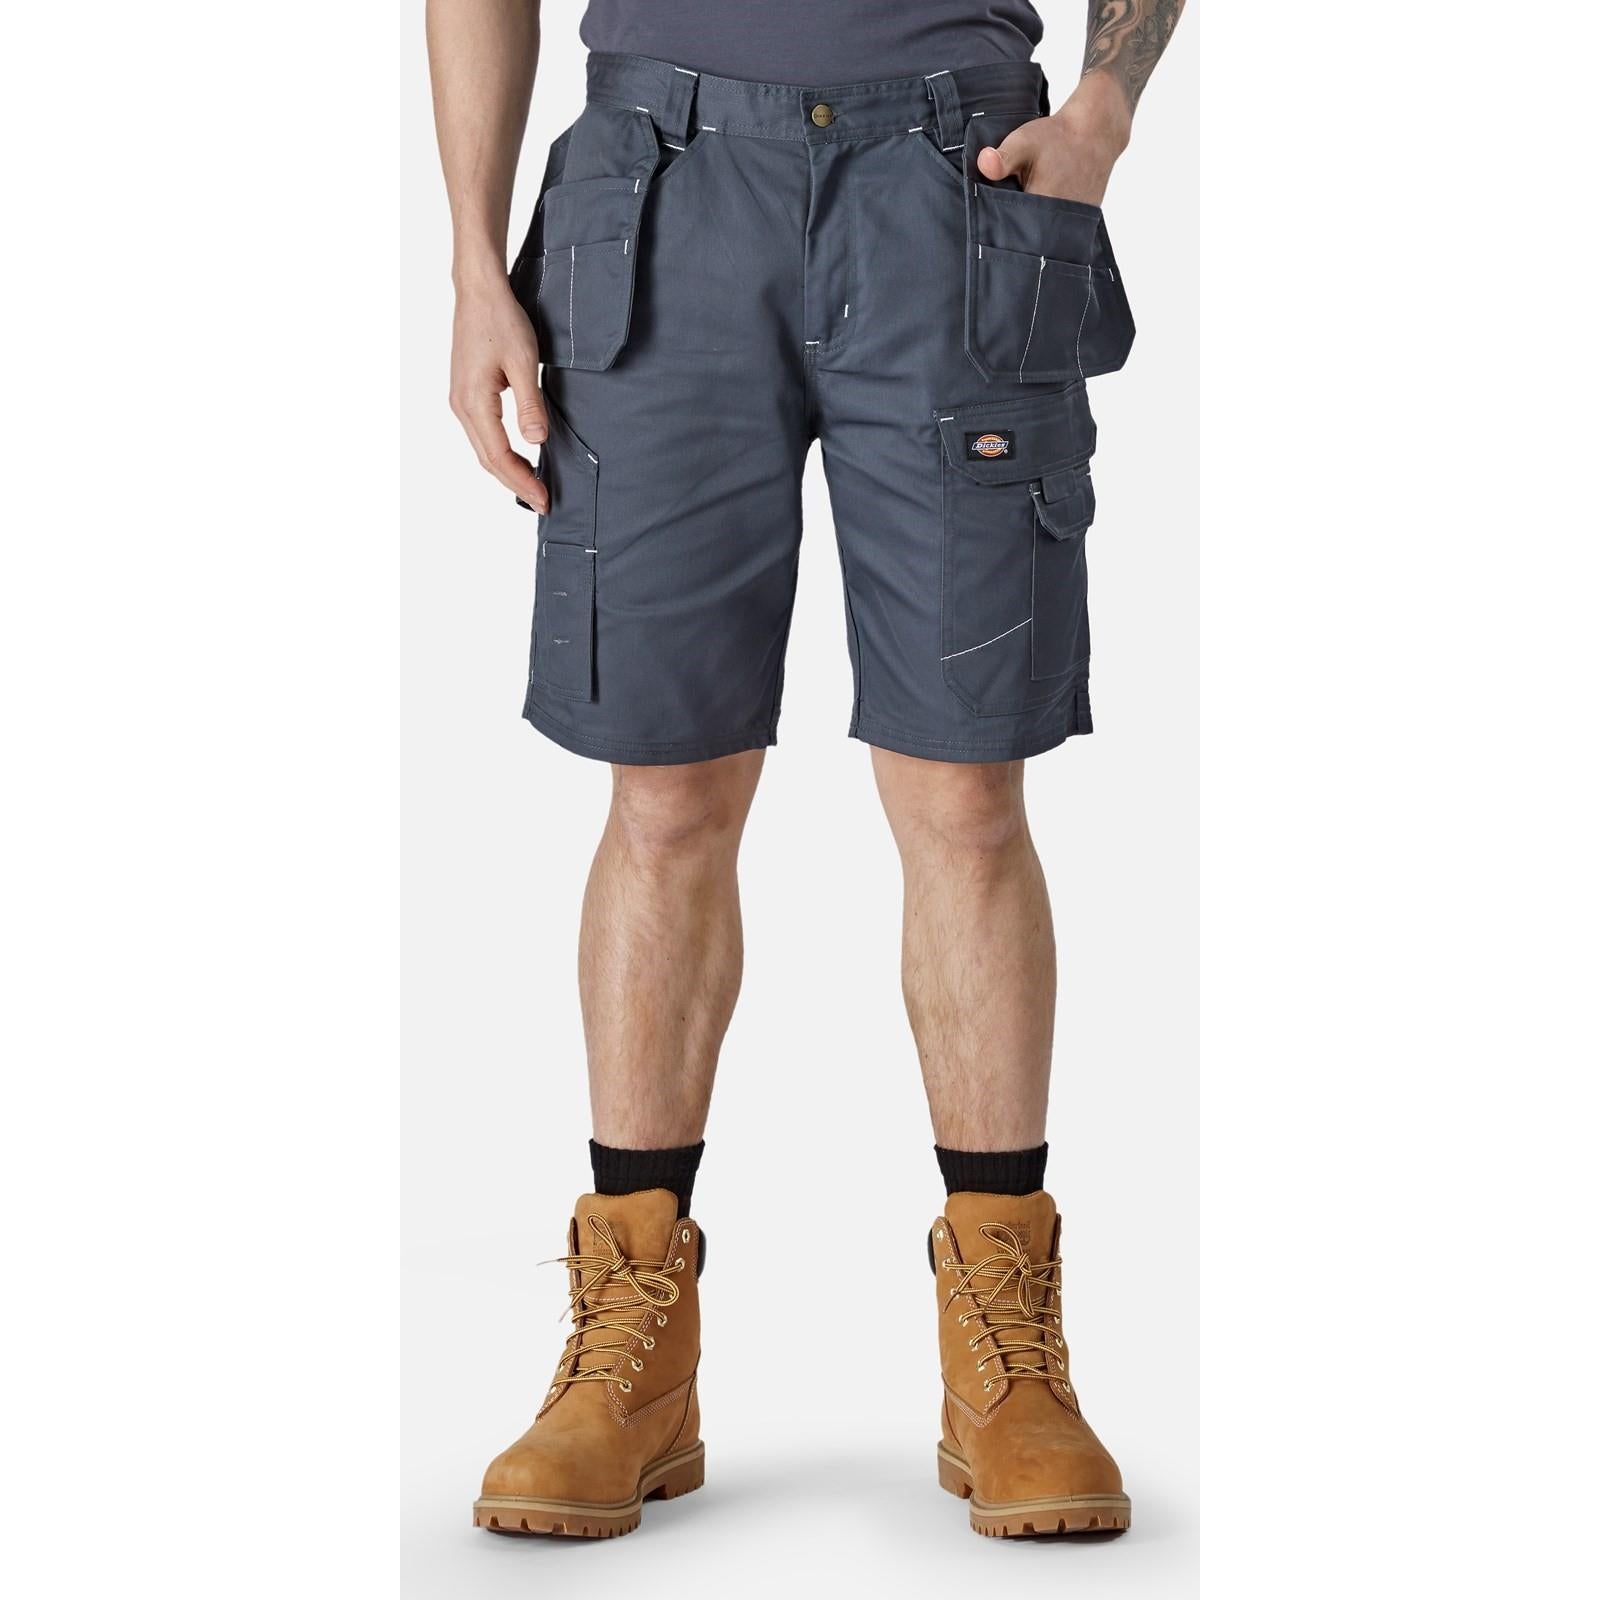 Dickies Redhawk Pro grey holster cargo multi pockets work shorts